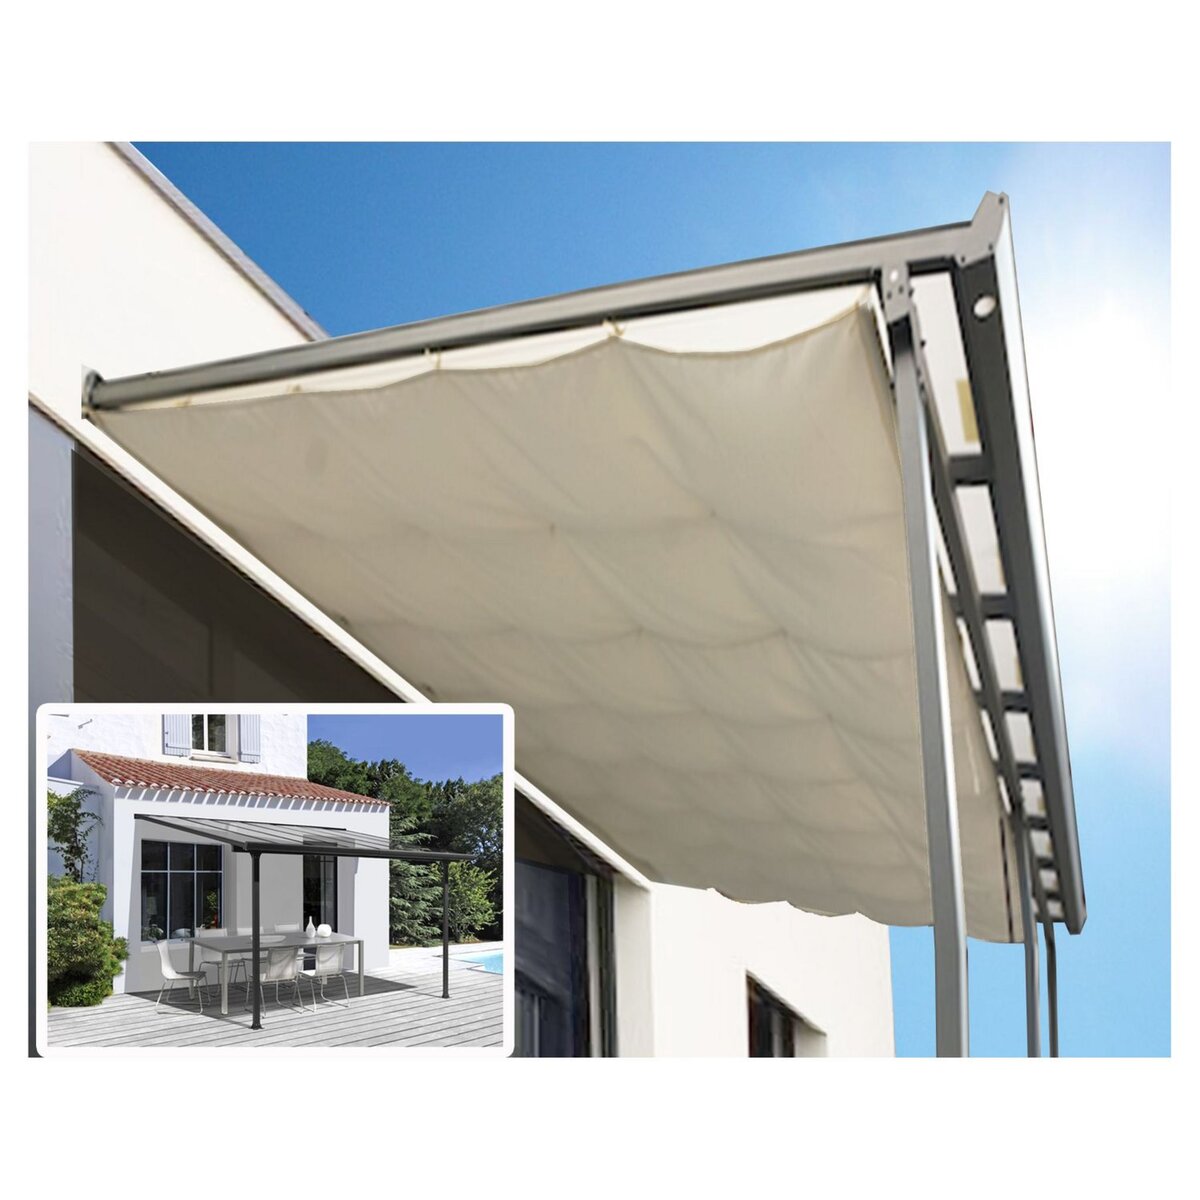 Habrita Toit terrasse avec rideau d'ombrage extensible - Aluminium - 9,21m²